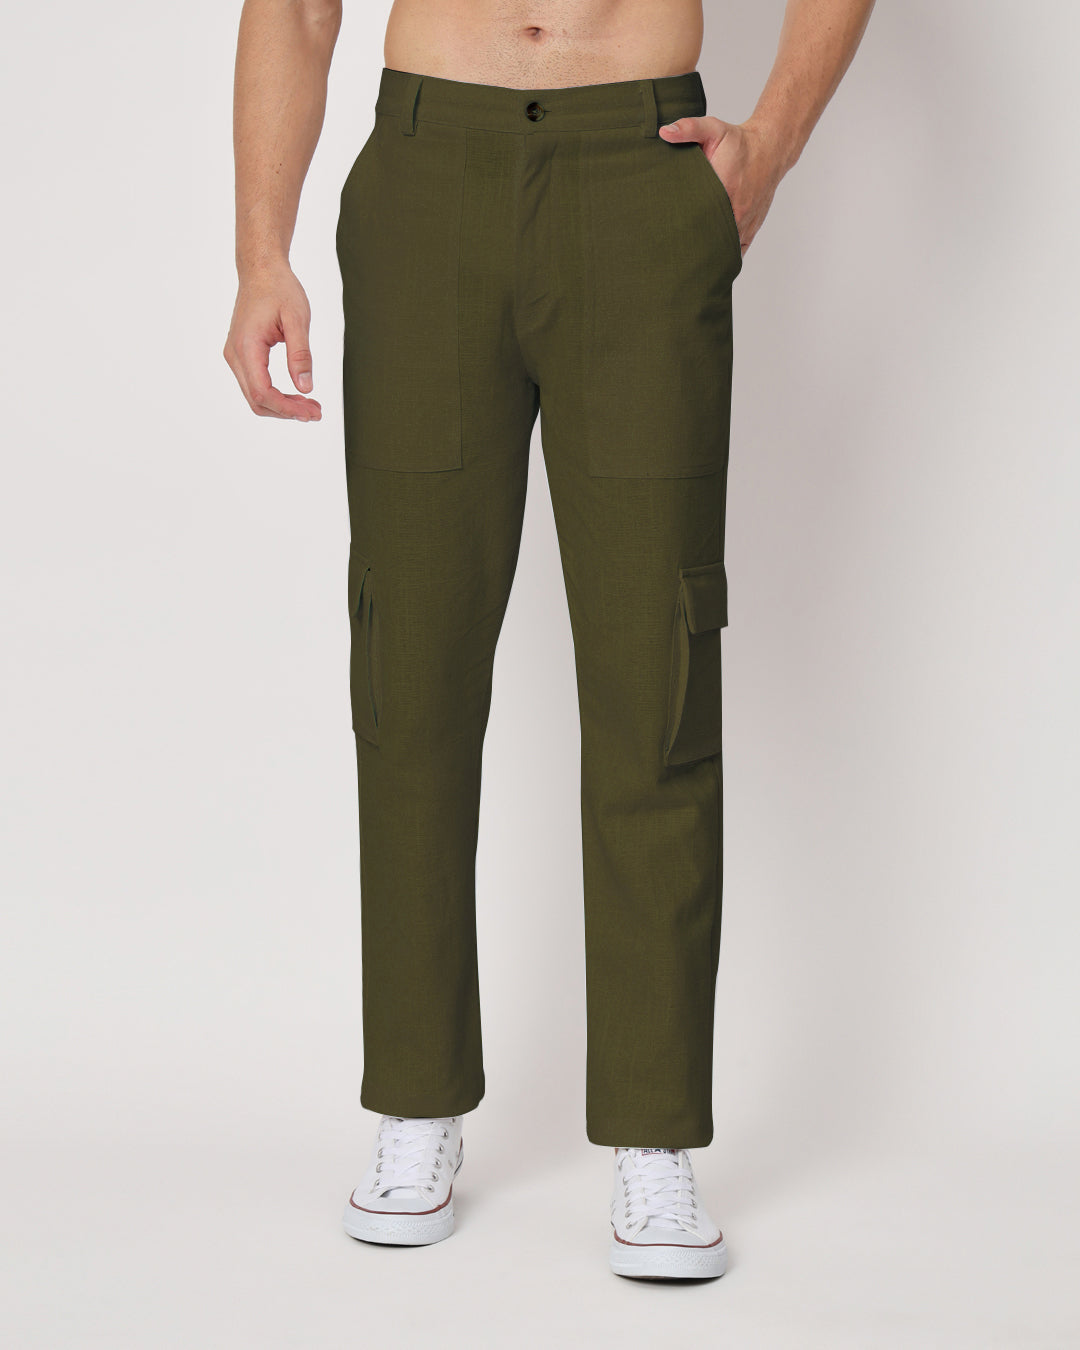 Combo: Function Flex White & Olive Green Men's Pants- Set Of 2